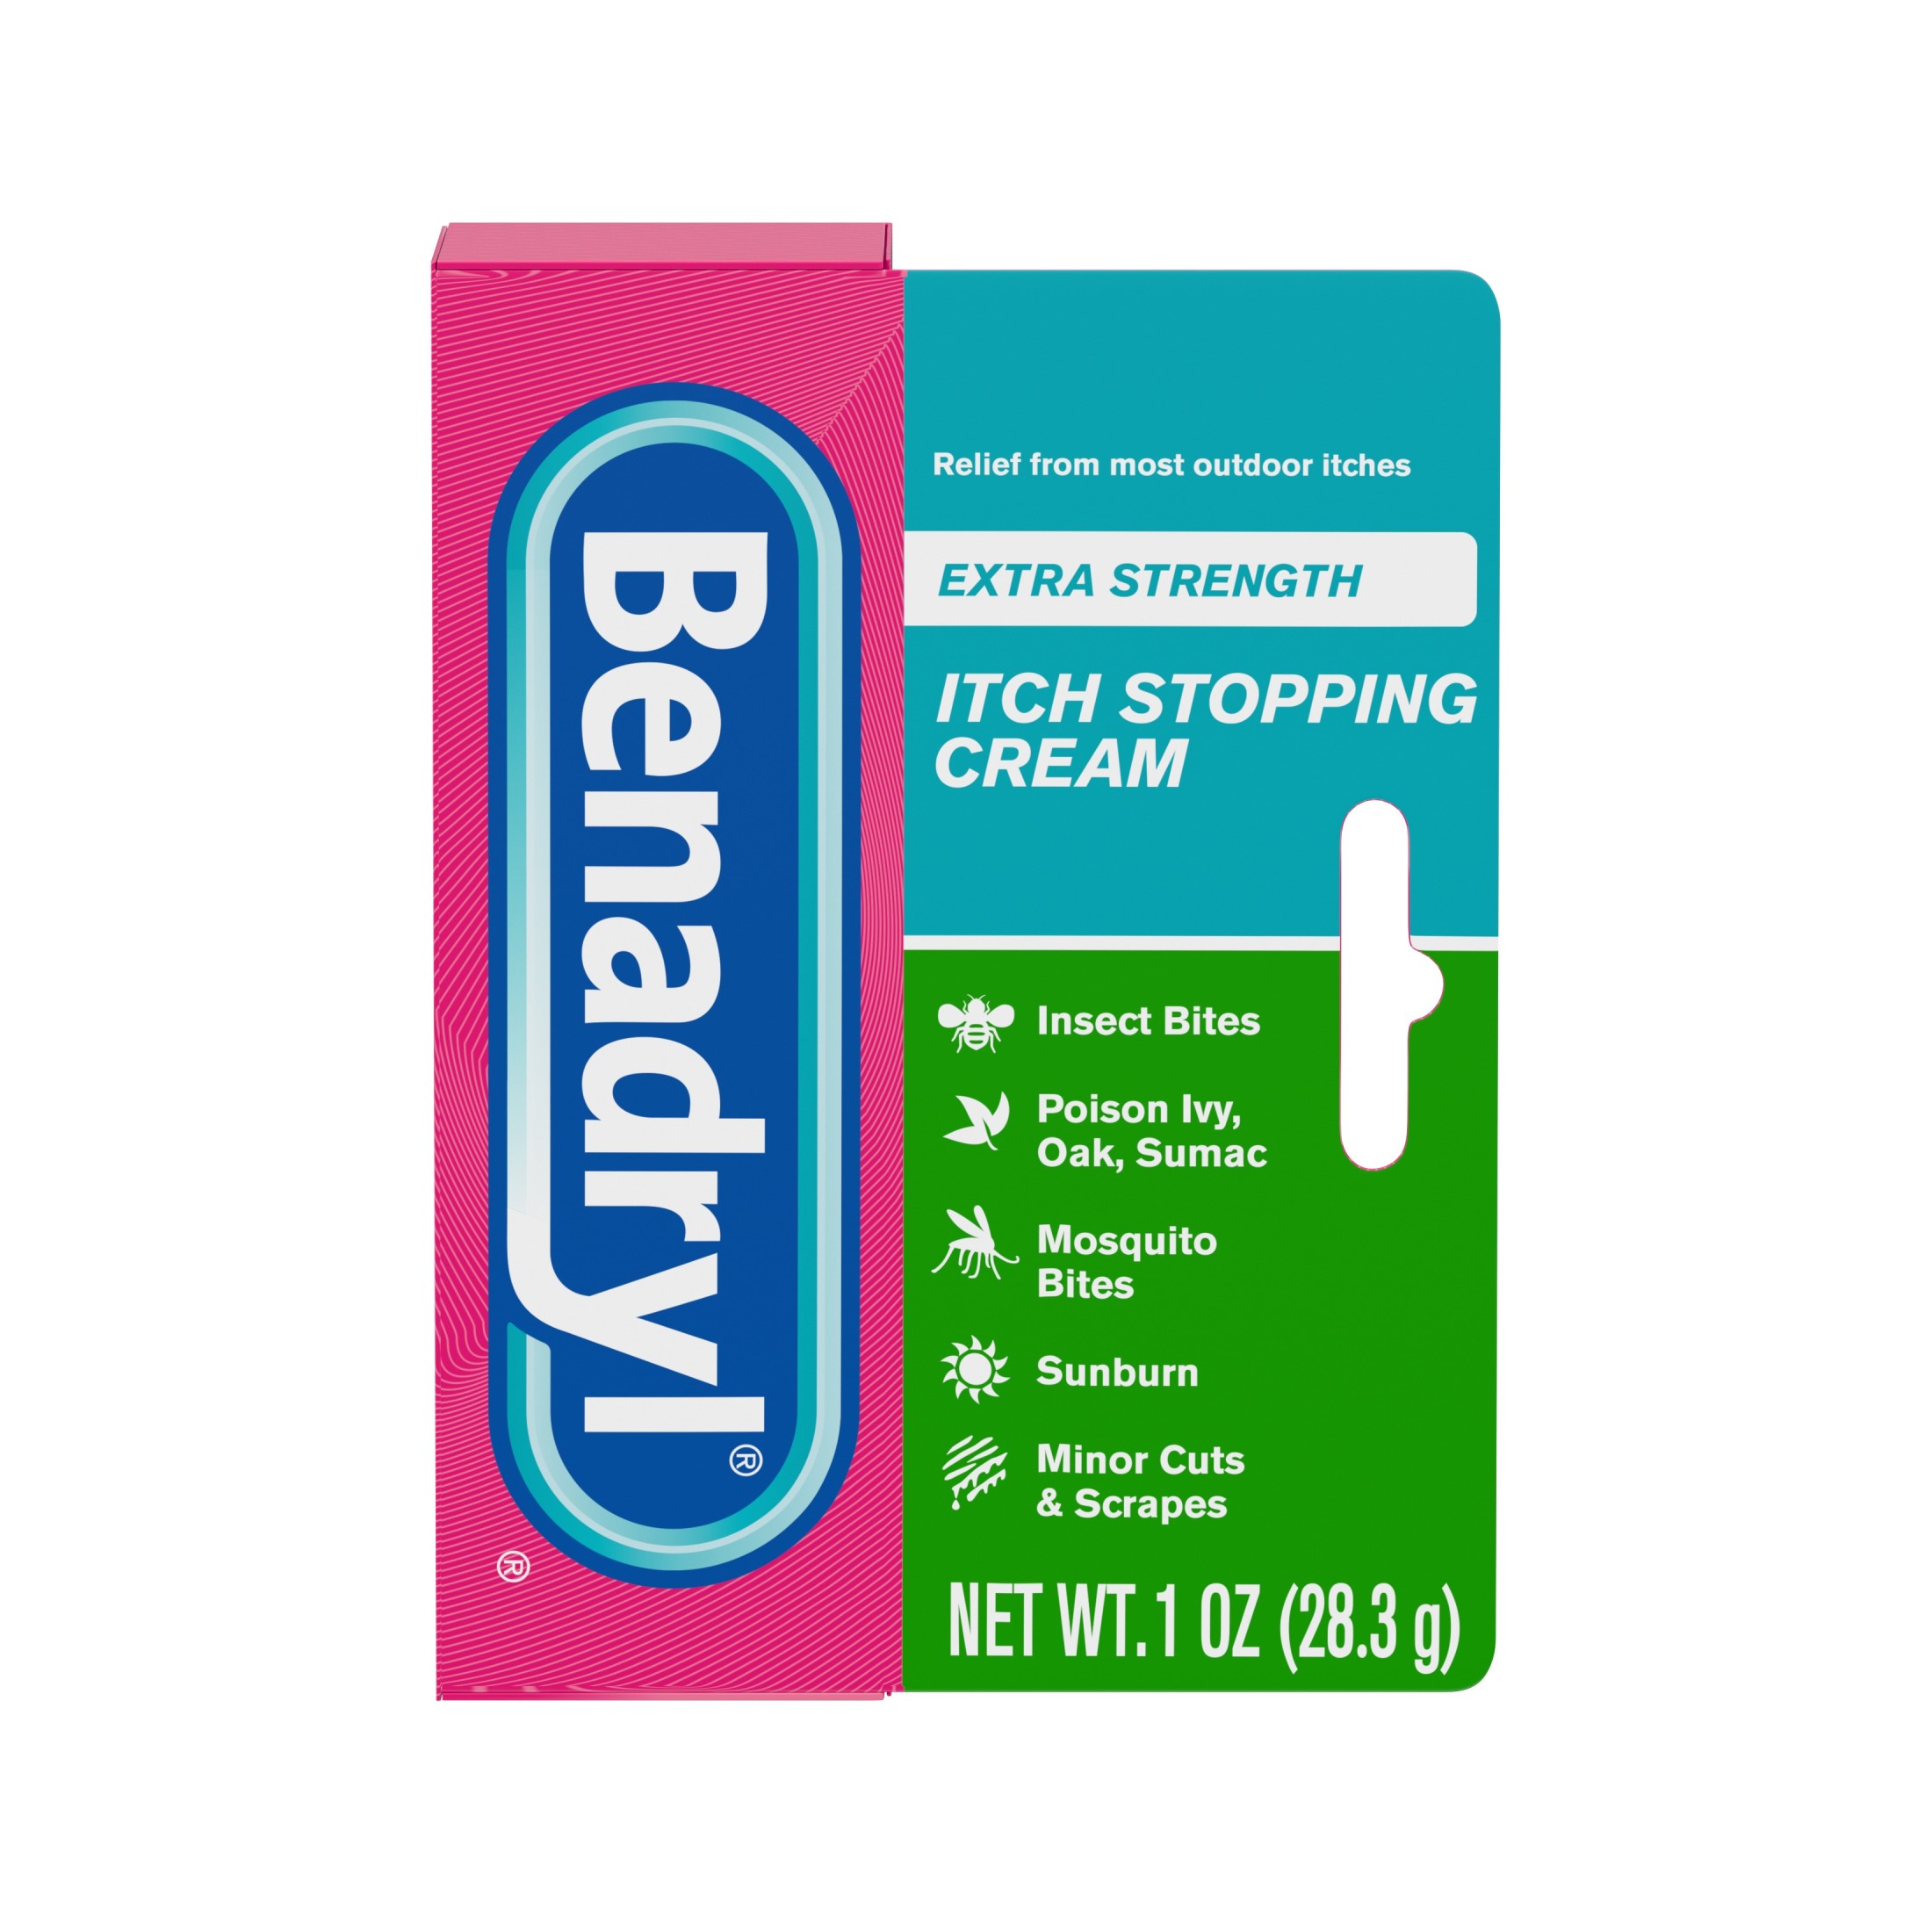 Benadryl Extra Strength Anti-Itch Topical Analgesic Cream, 1 oz - image 1 of 12